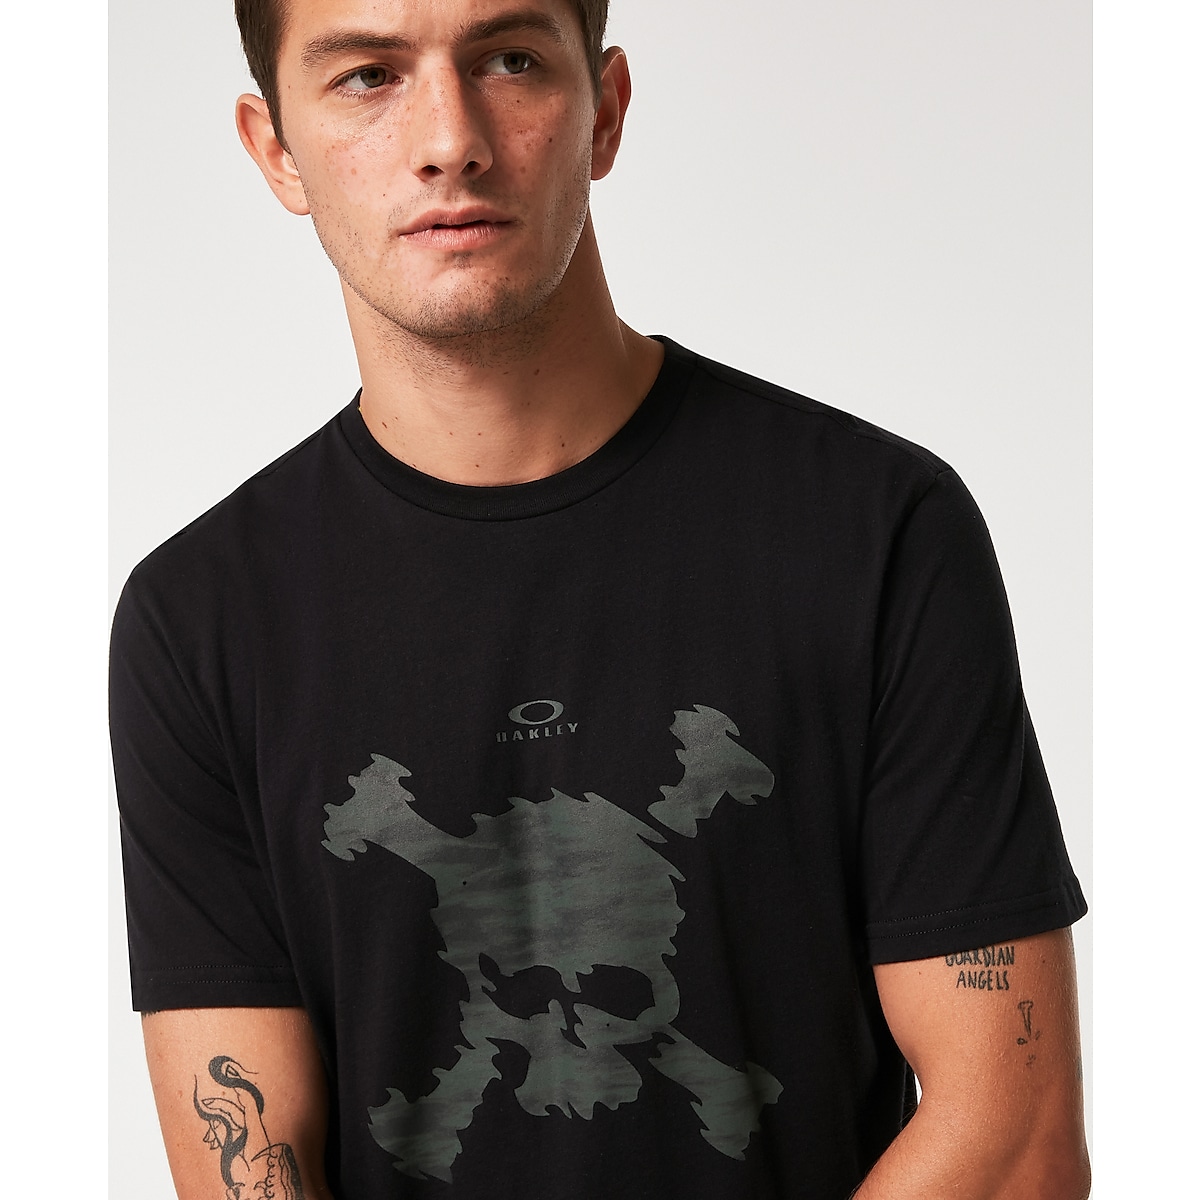 Camiseta Oakley - Skull